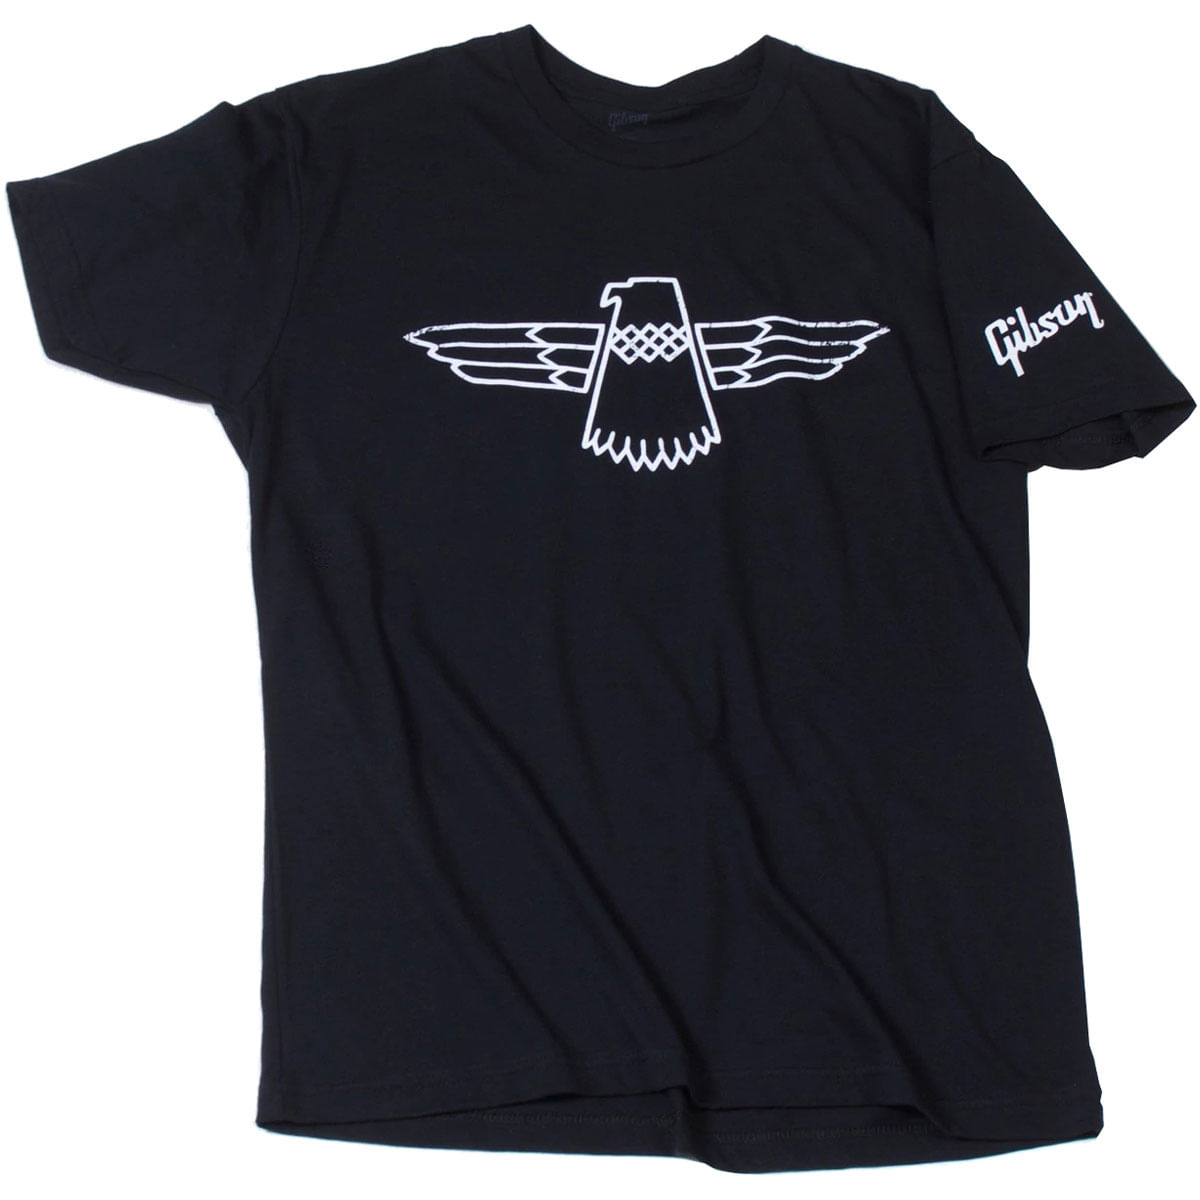 View larger image of Gibson Thunderbird T-Shirt - Black, XL